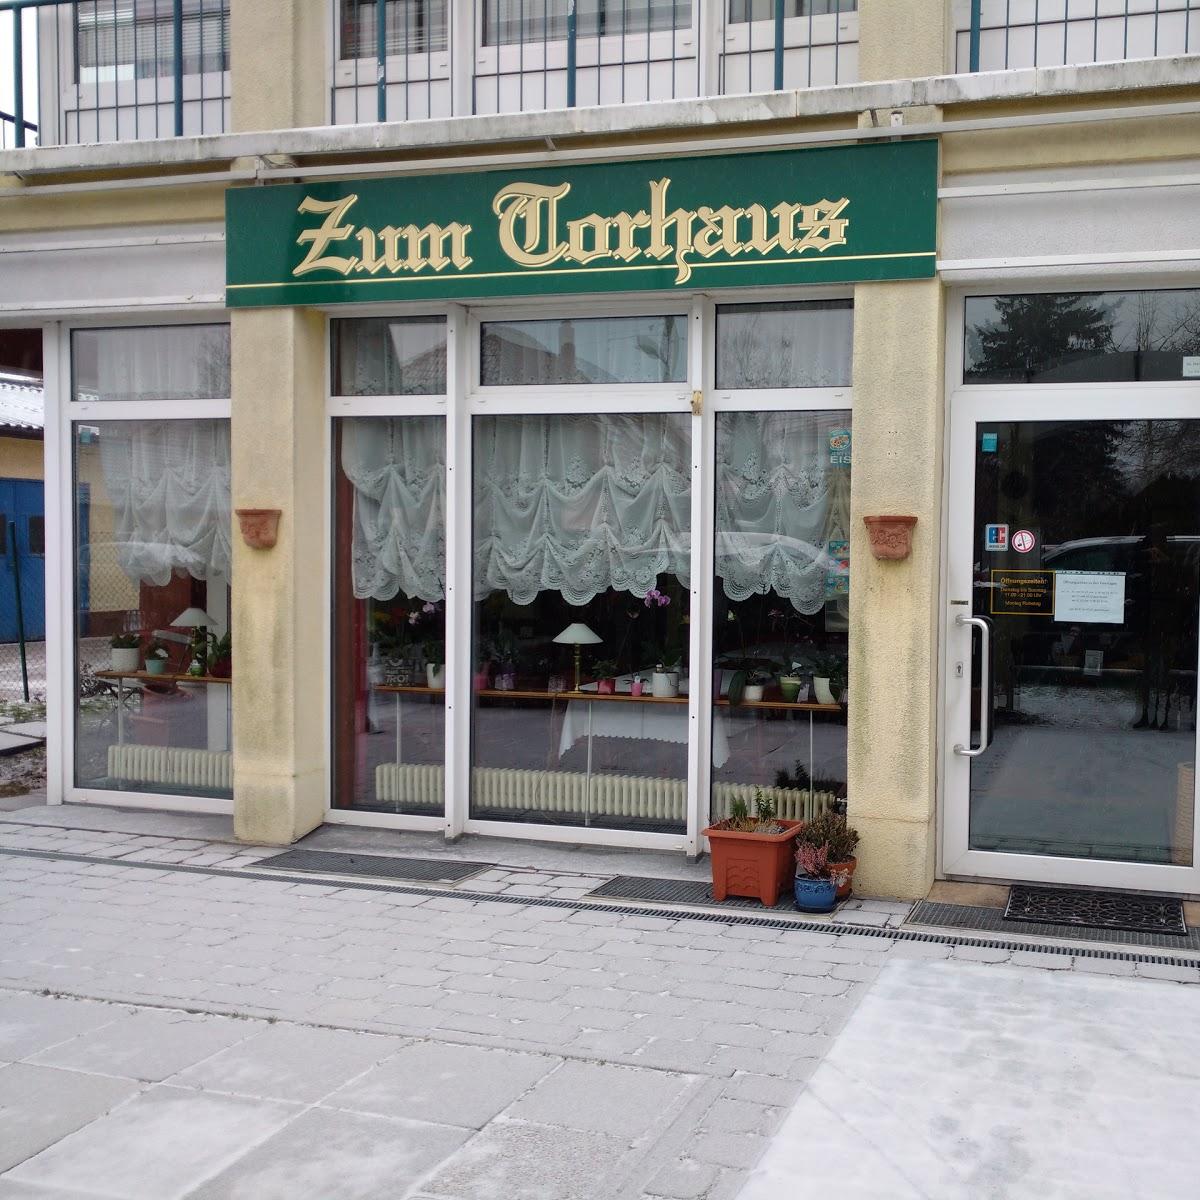 Restaurant "Zum Torhaus" in  Berlin